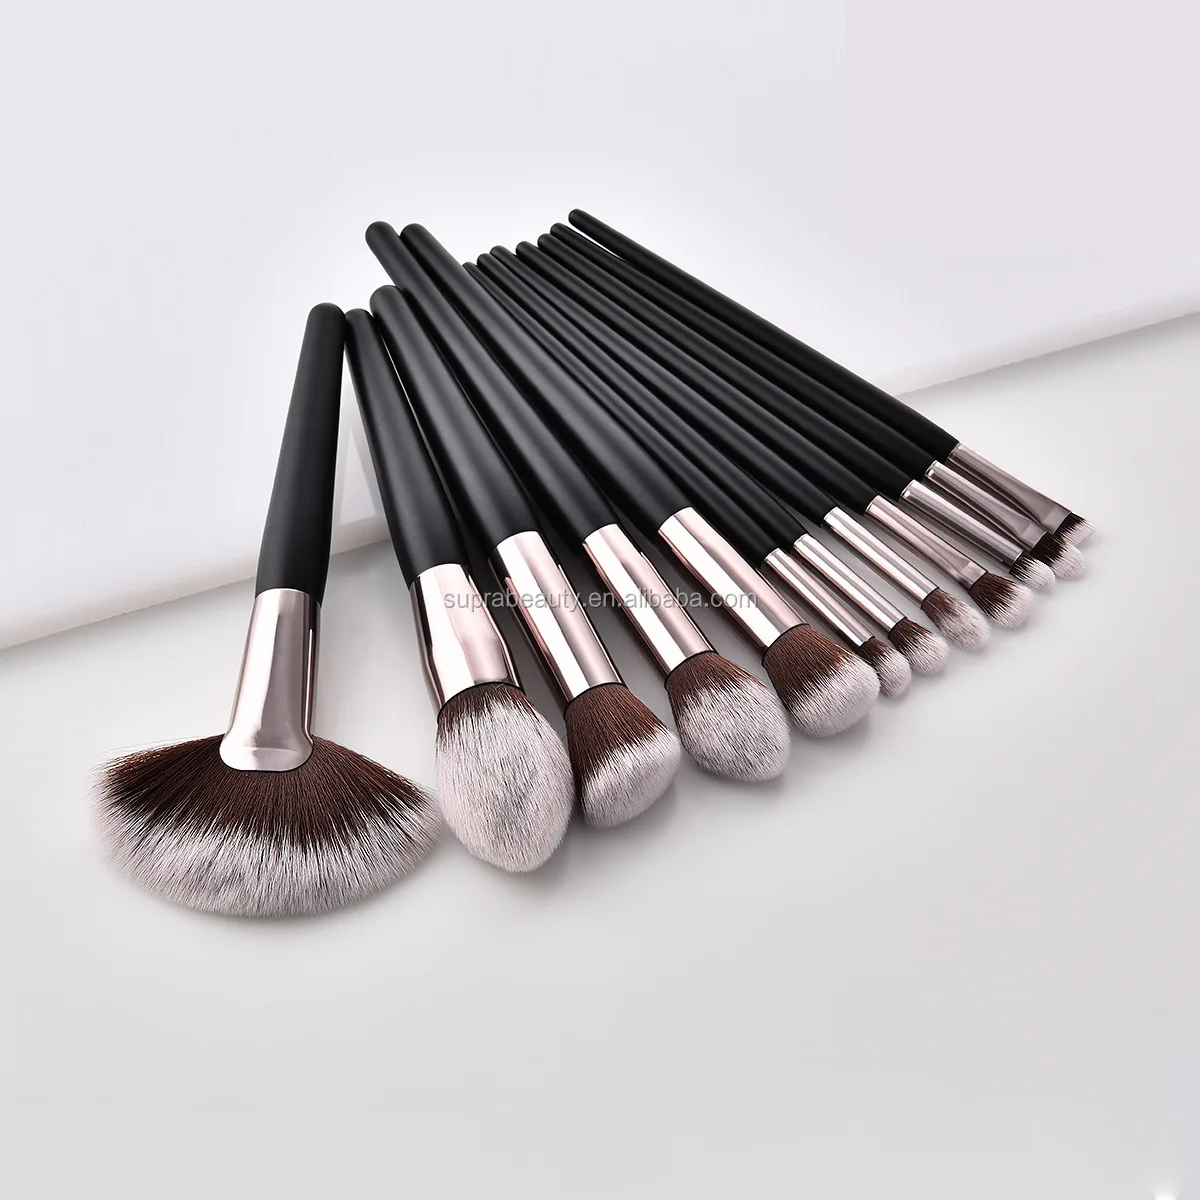 12pcs Foundation Makeup Cosmetic Personalized Set 7pcs Bristle Custom Brush Make Up